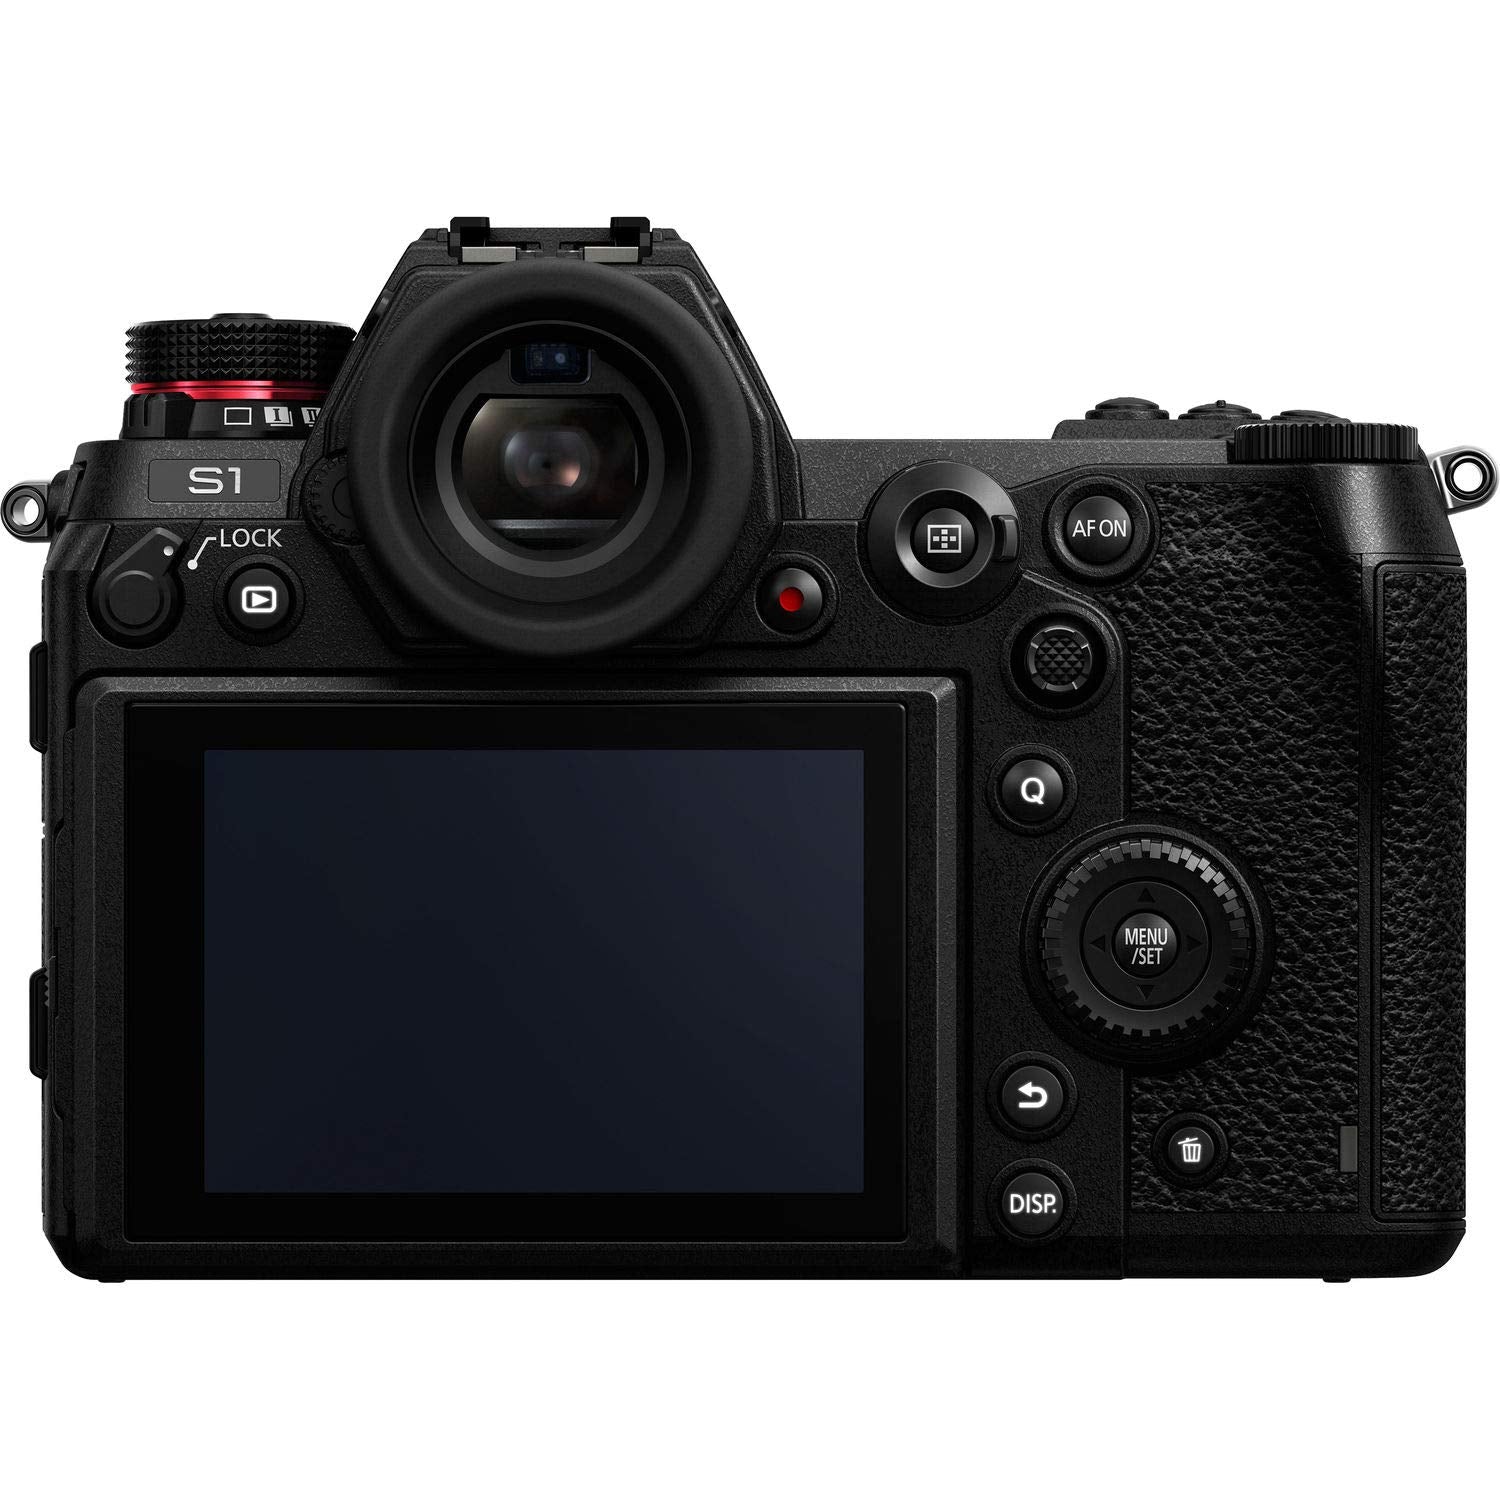 Panasonic Lumix DC-S1 Mirrorless Digital Camera with 24-105mm Lens NEW - Pro Photographer Bundle